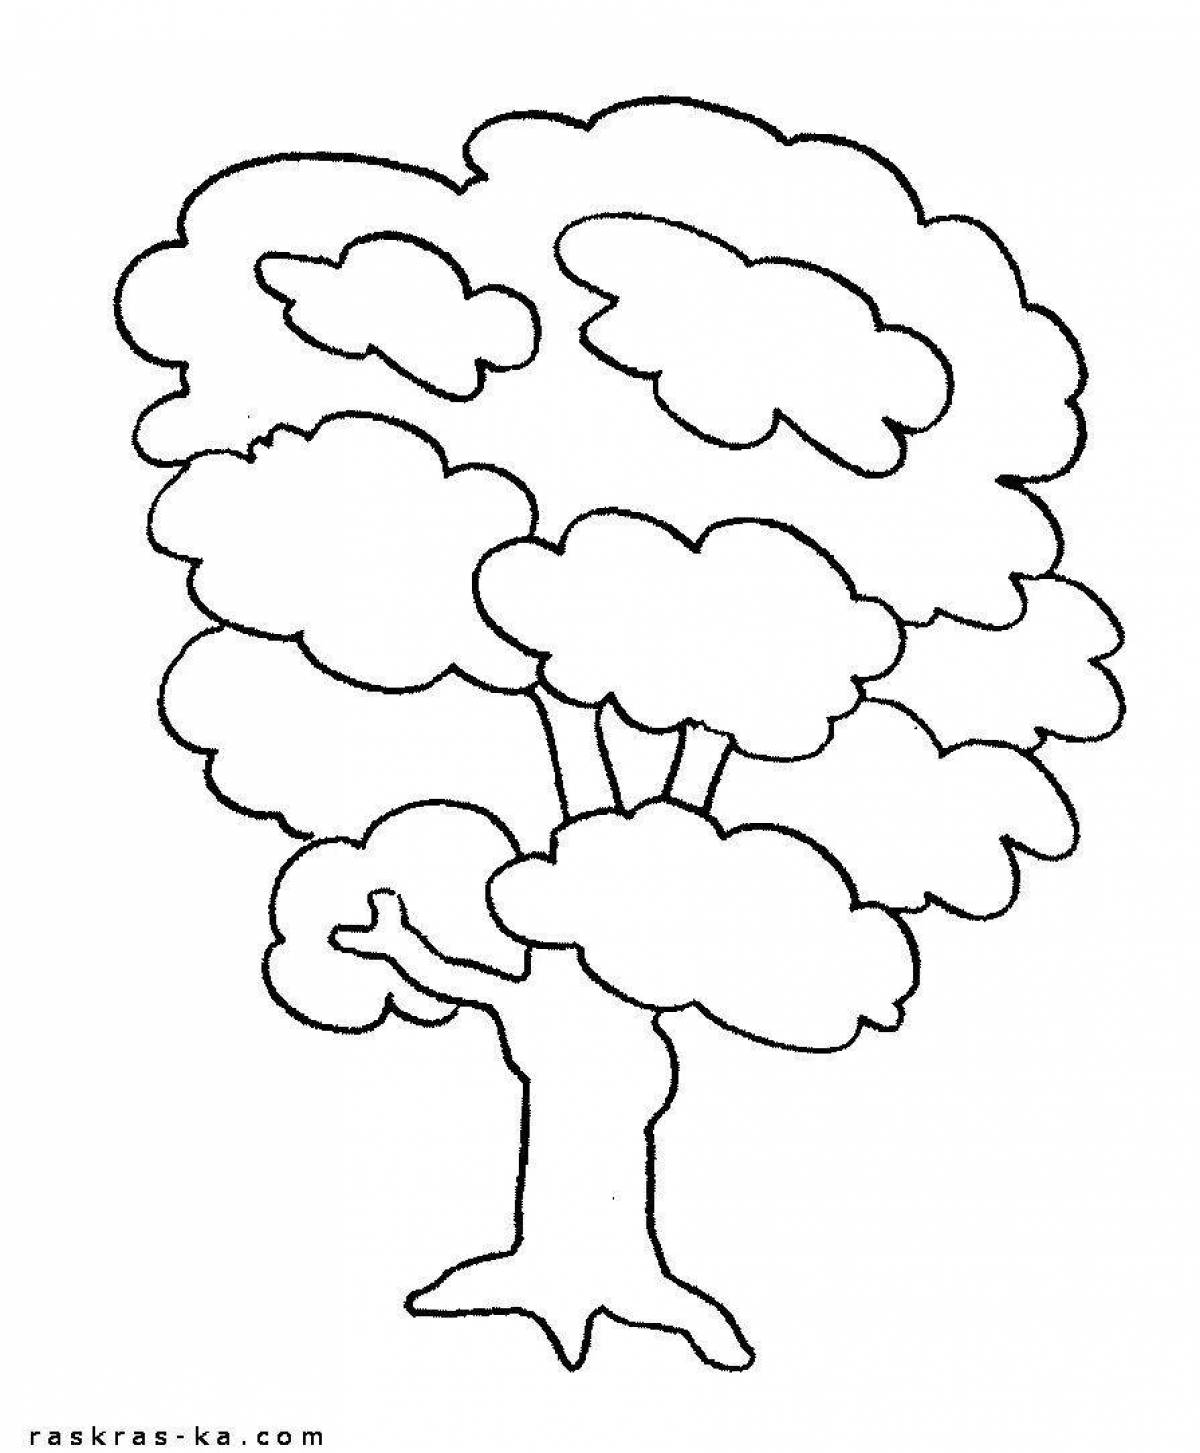 Drawing tree #1